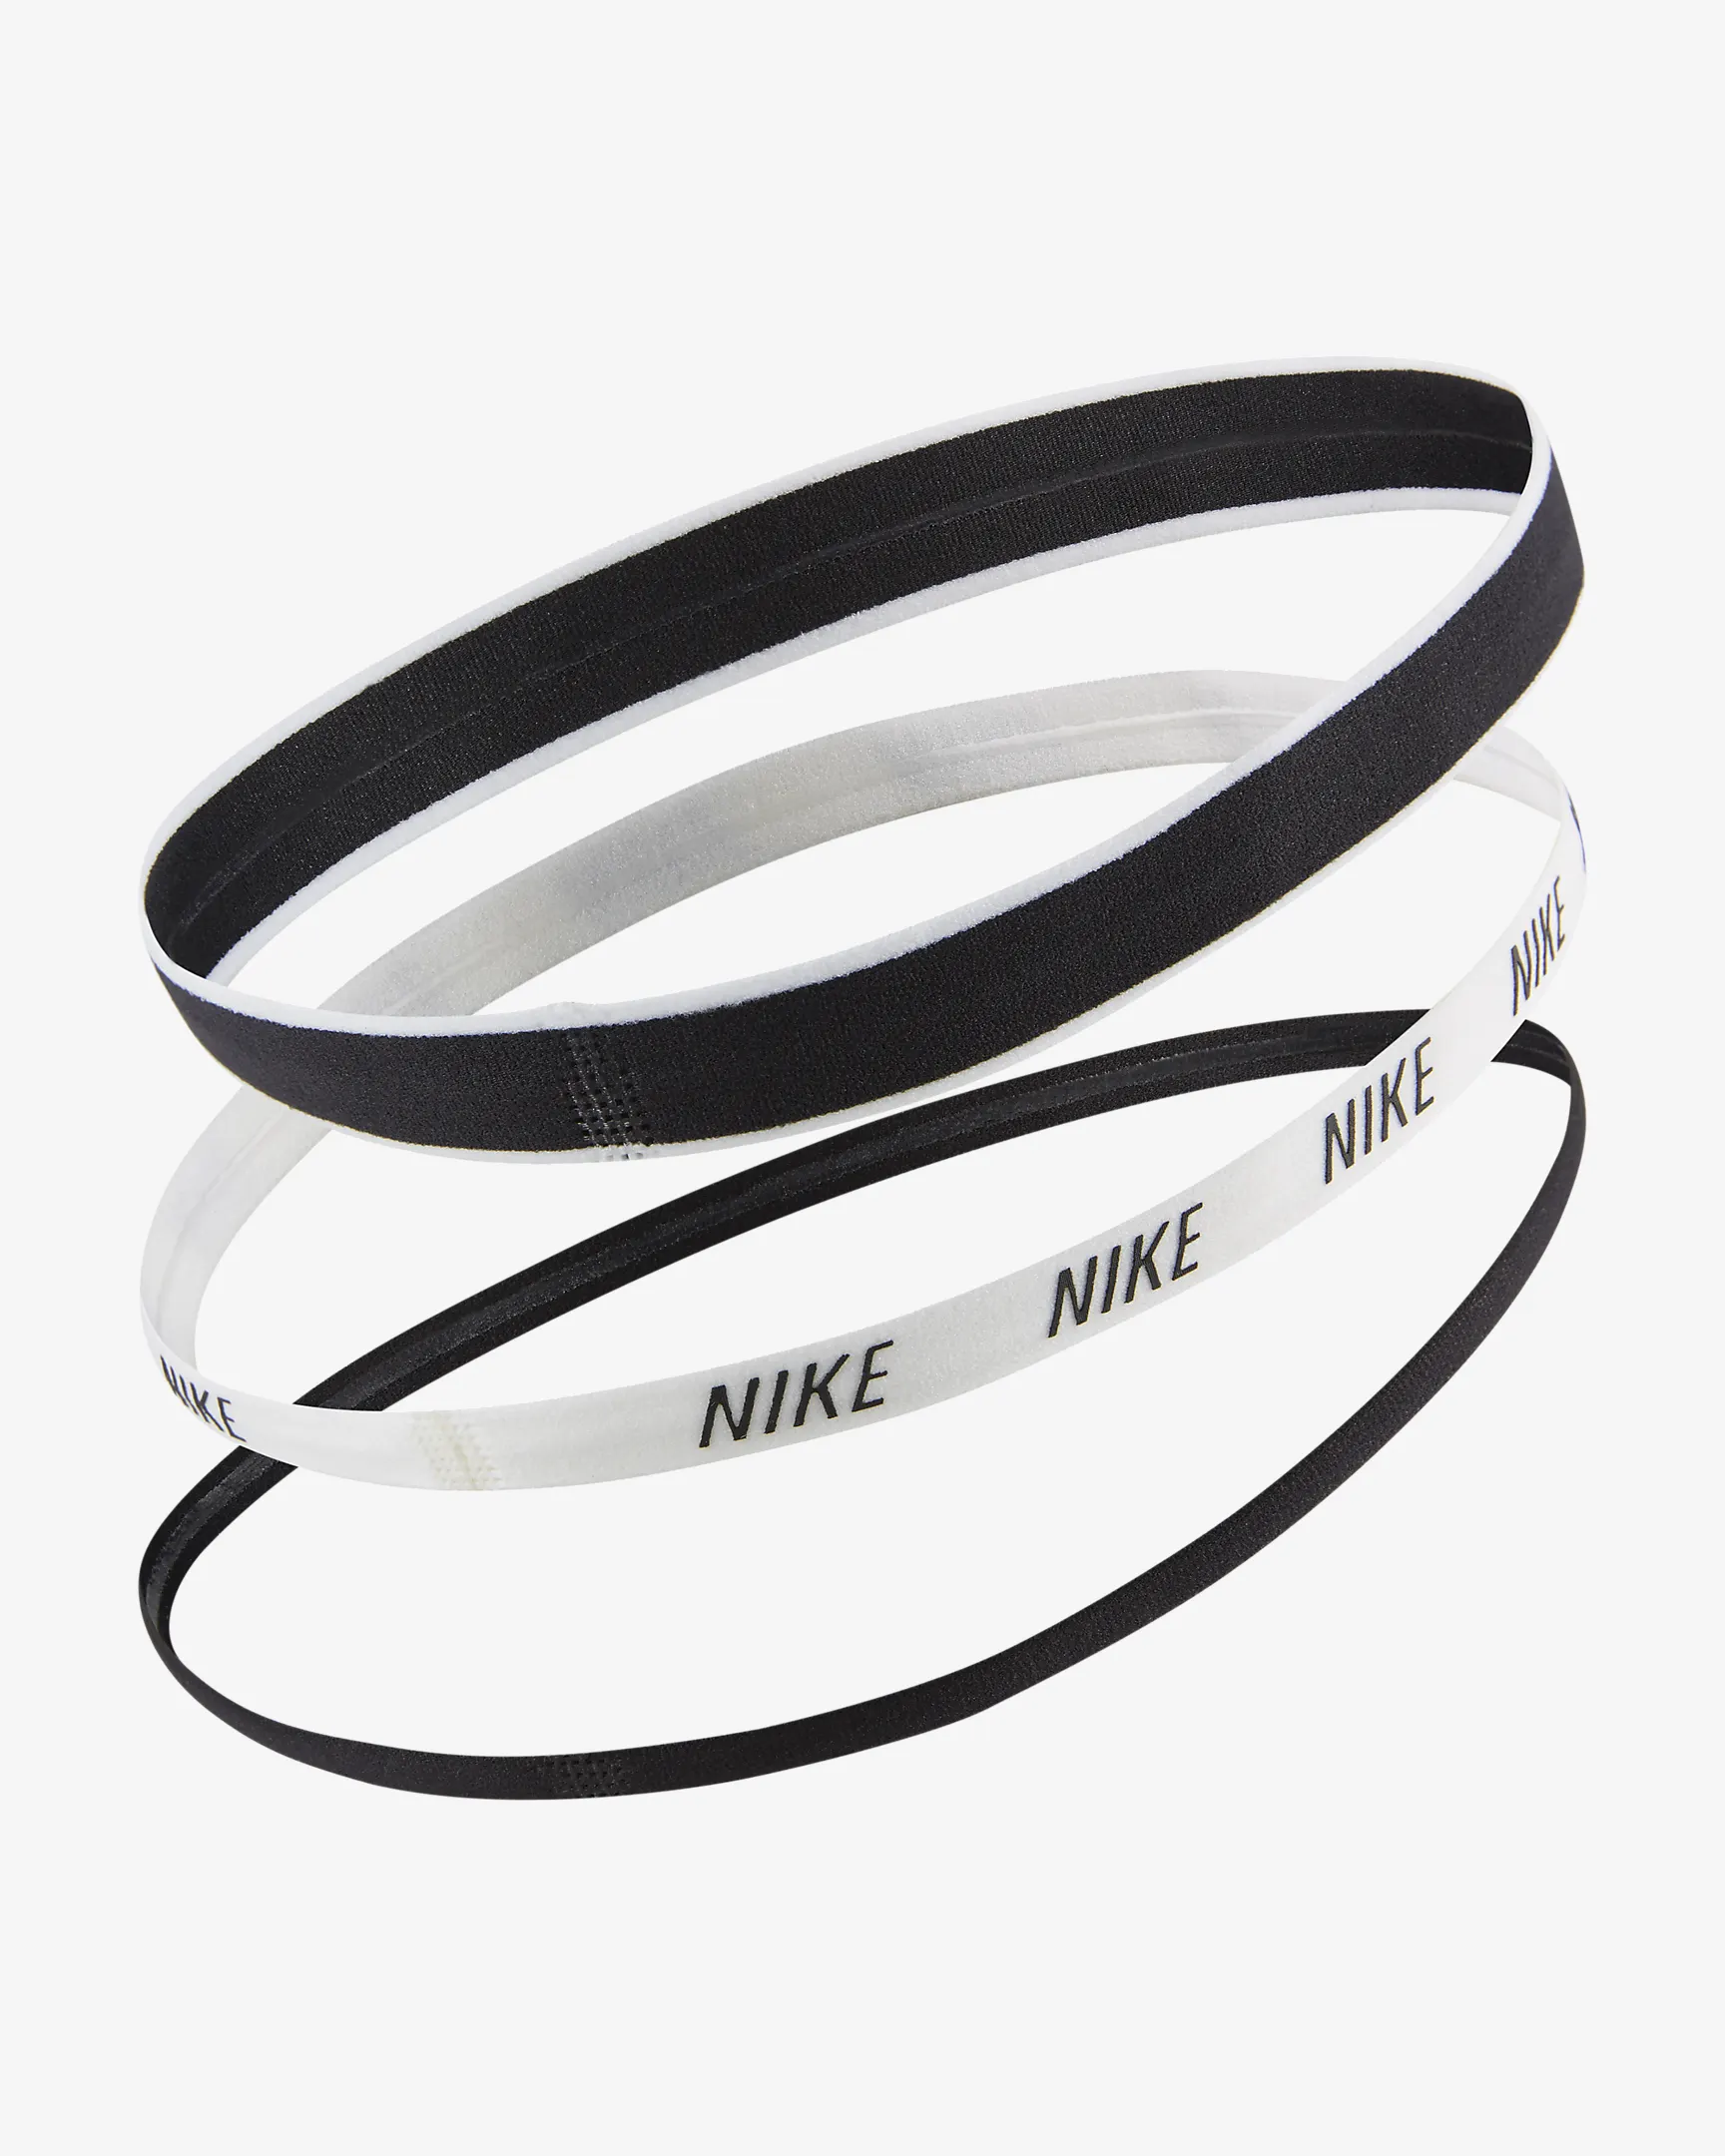 Nike Headbands (3 Pack)